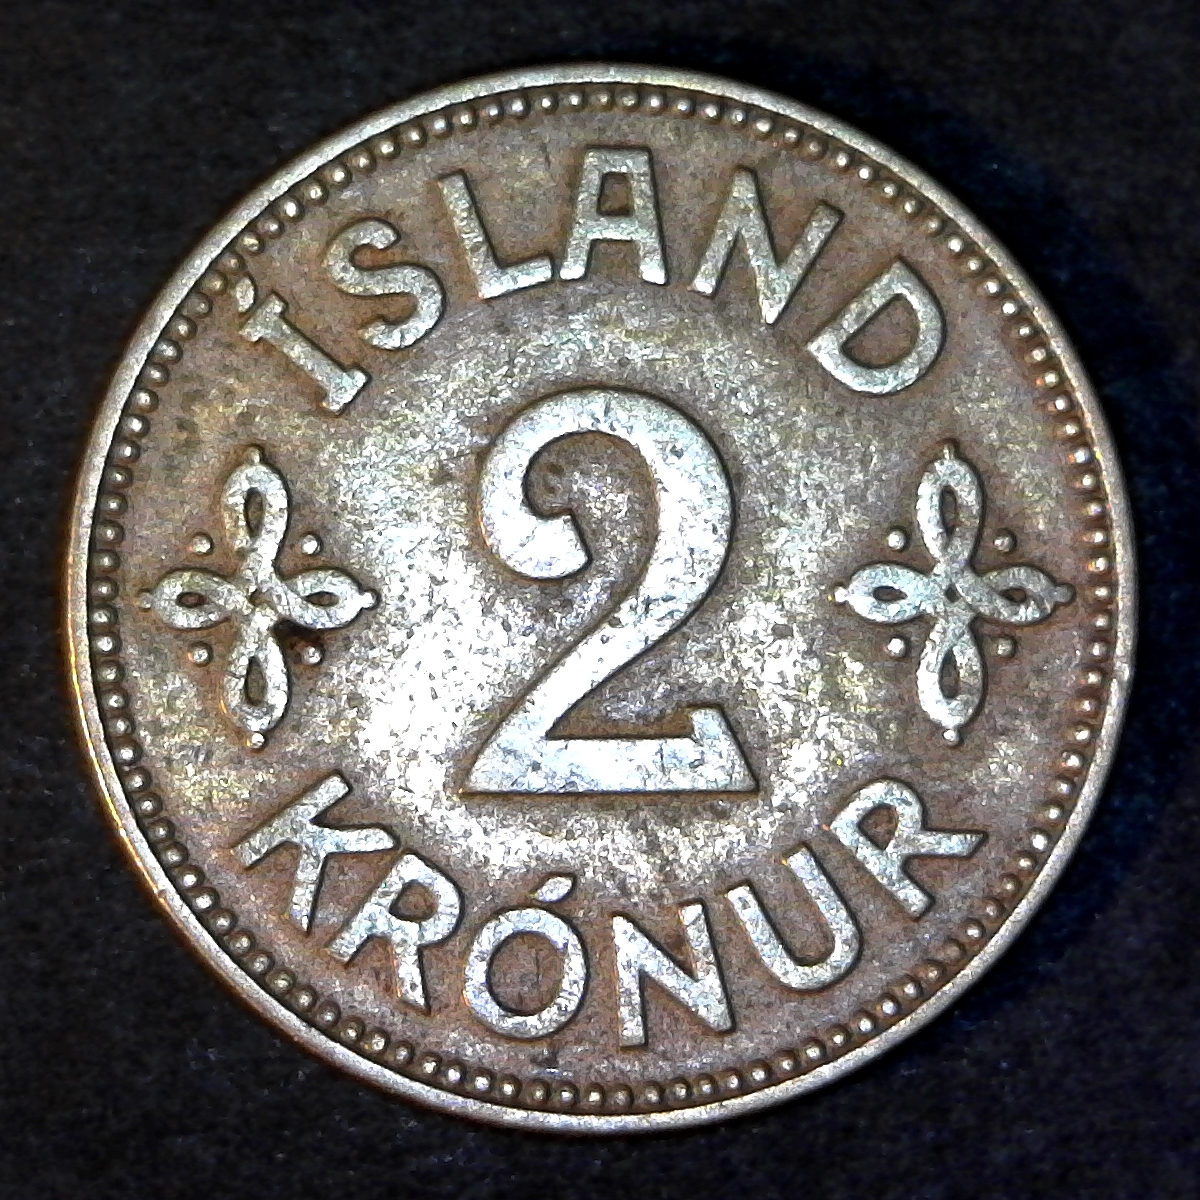 Iceland 2 kronur 1925 obv.jpg